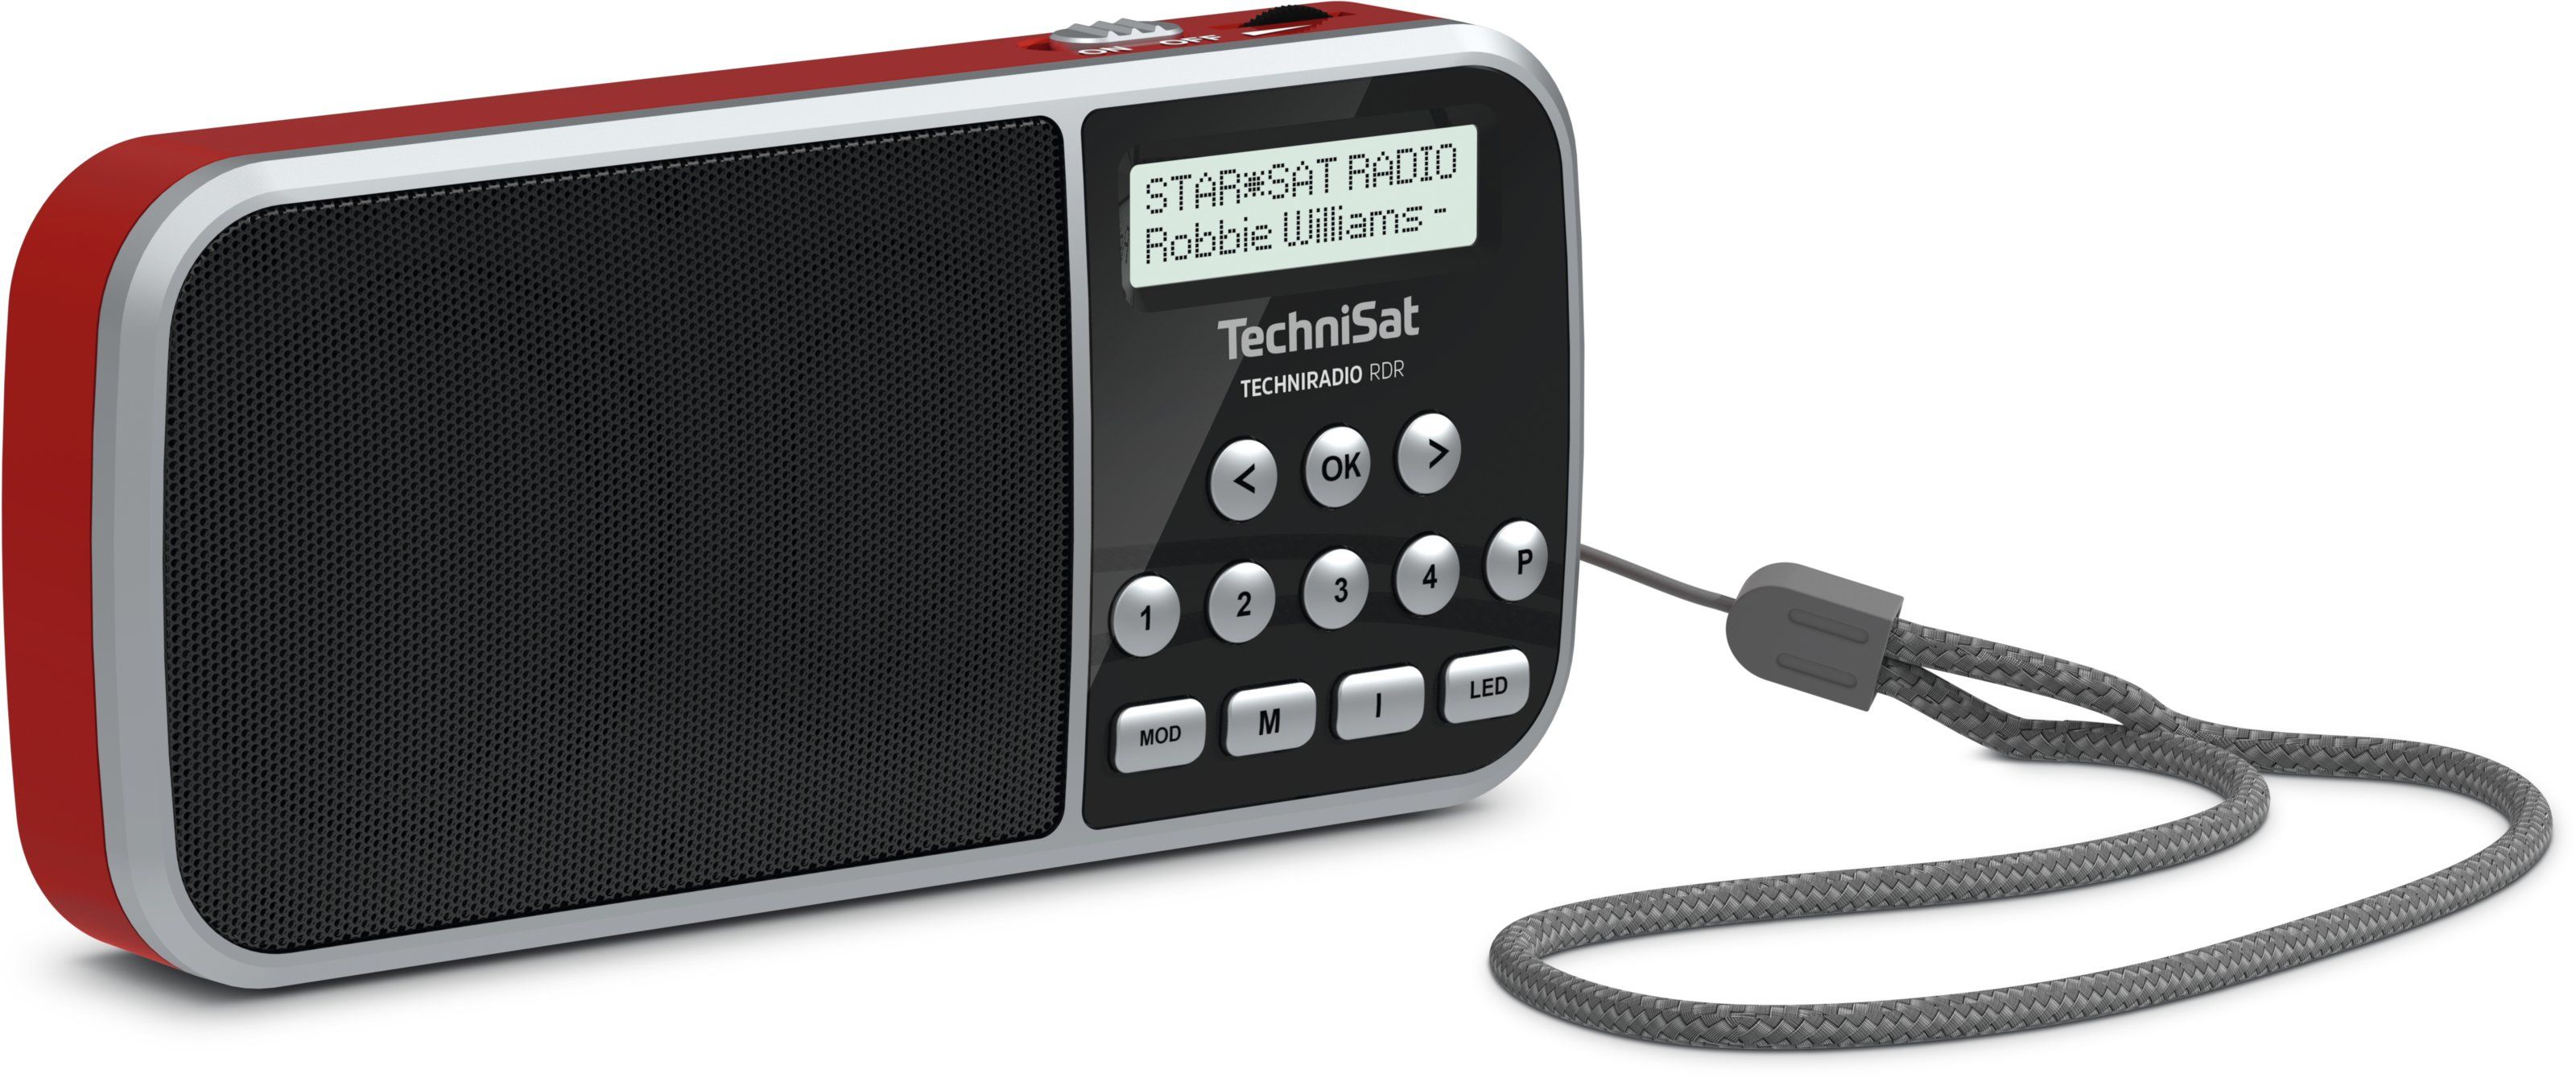 TechniSat TechniRadio RDR DAB+, Technomarkt FM Radio Tragbar von expert (Rot)